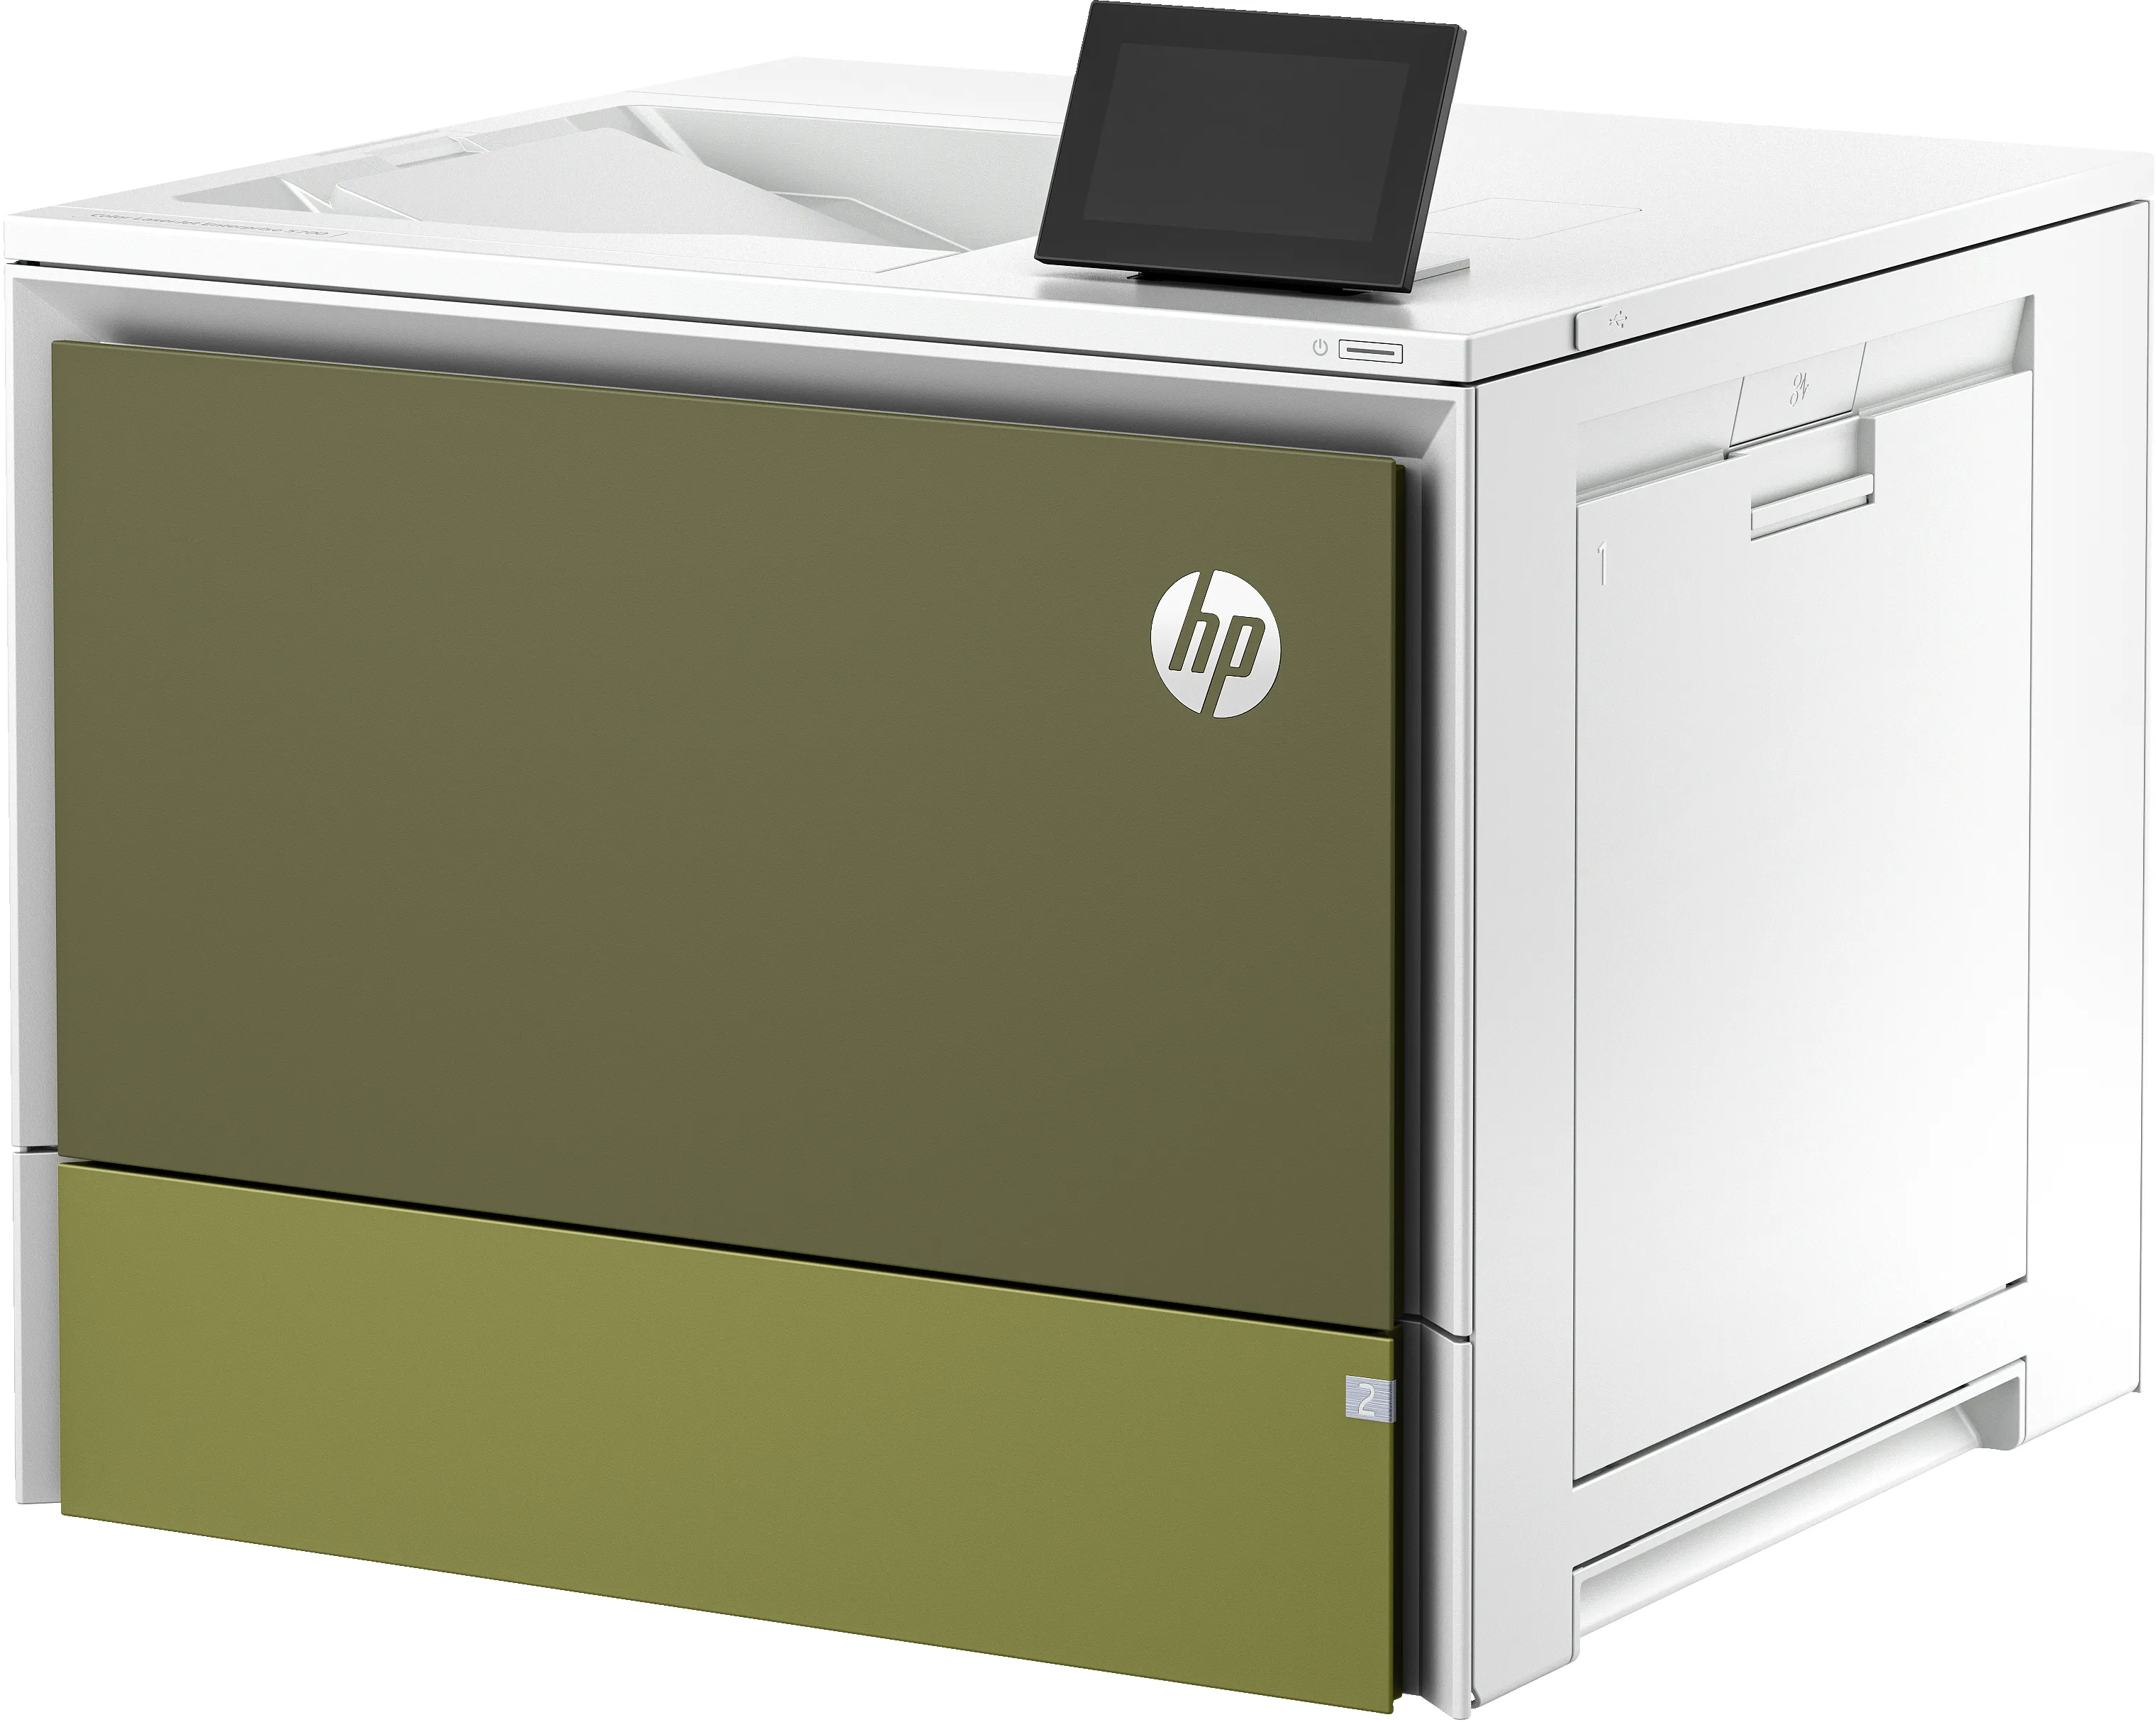 Vente HP Clr LJ Green 550 Sheet Paper Tray HP au meilleur prix - visuel 2